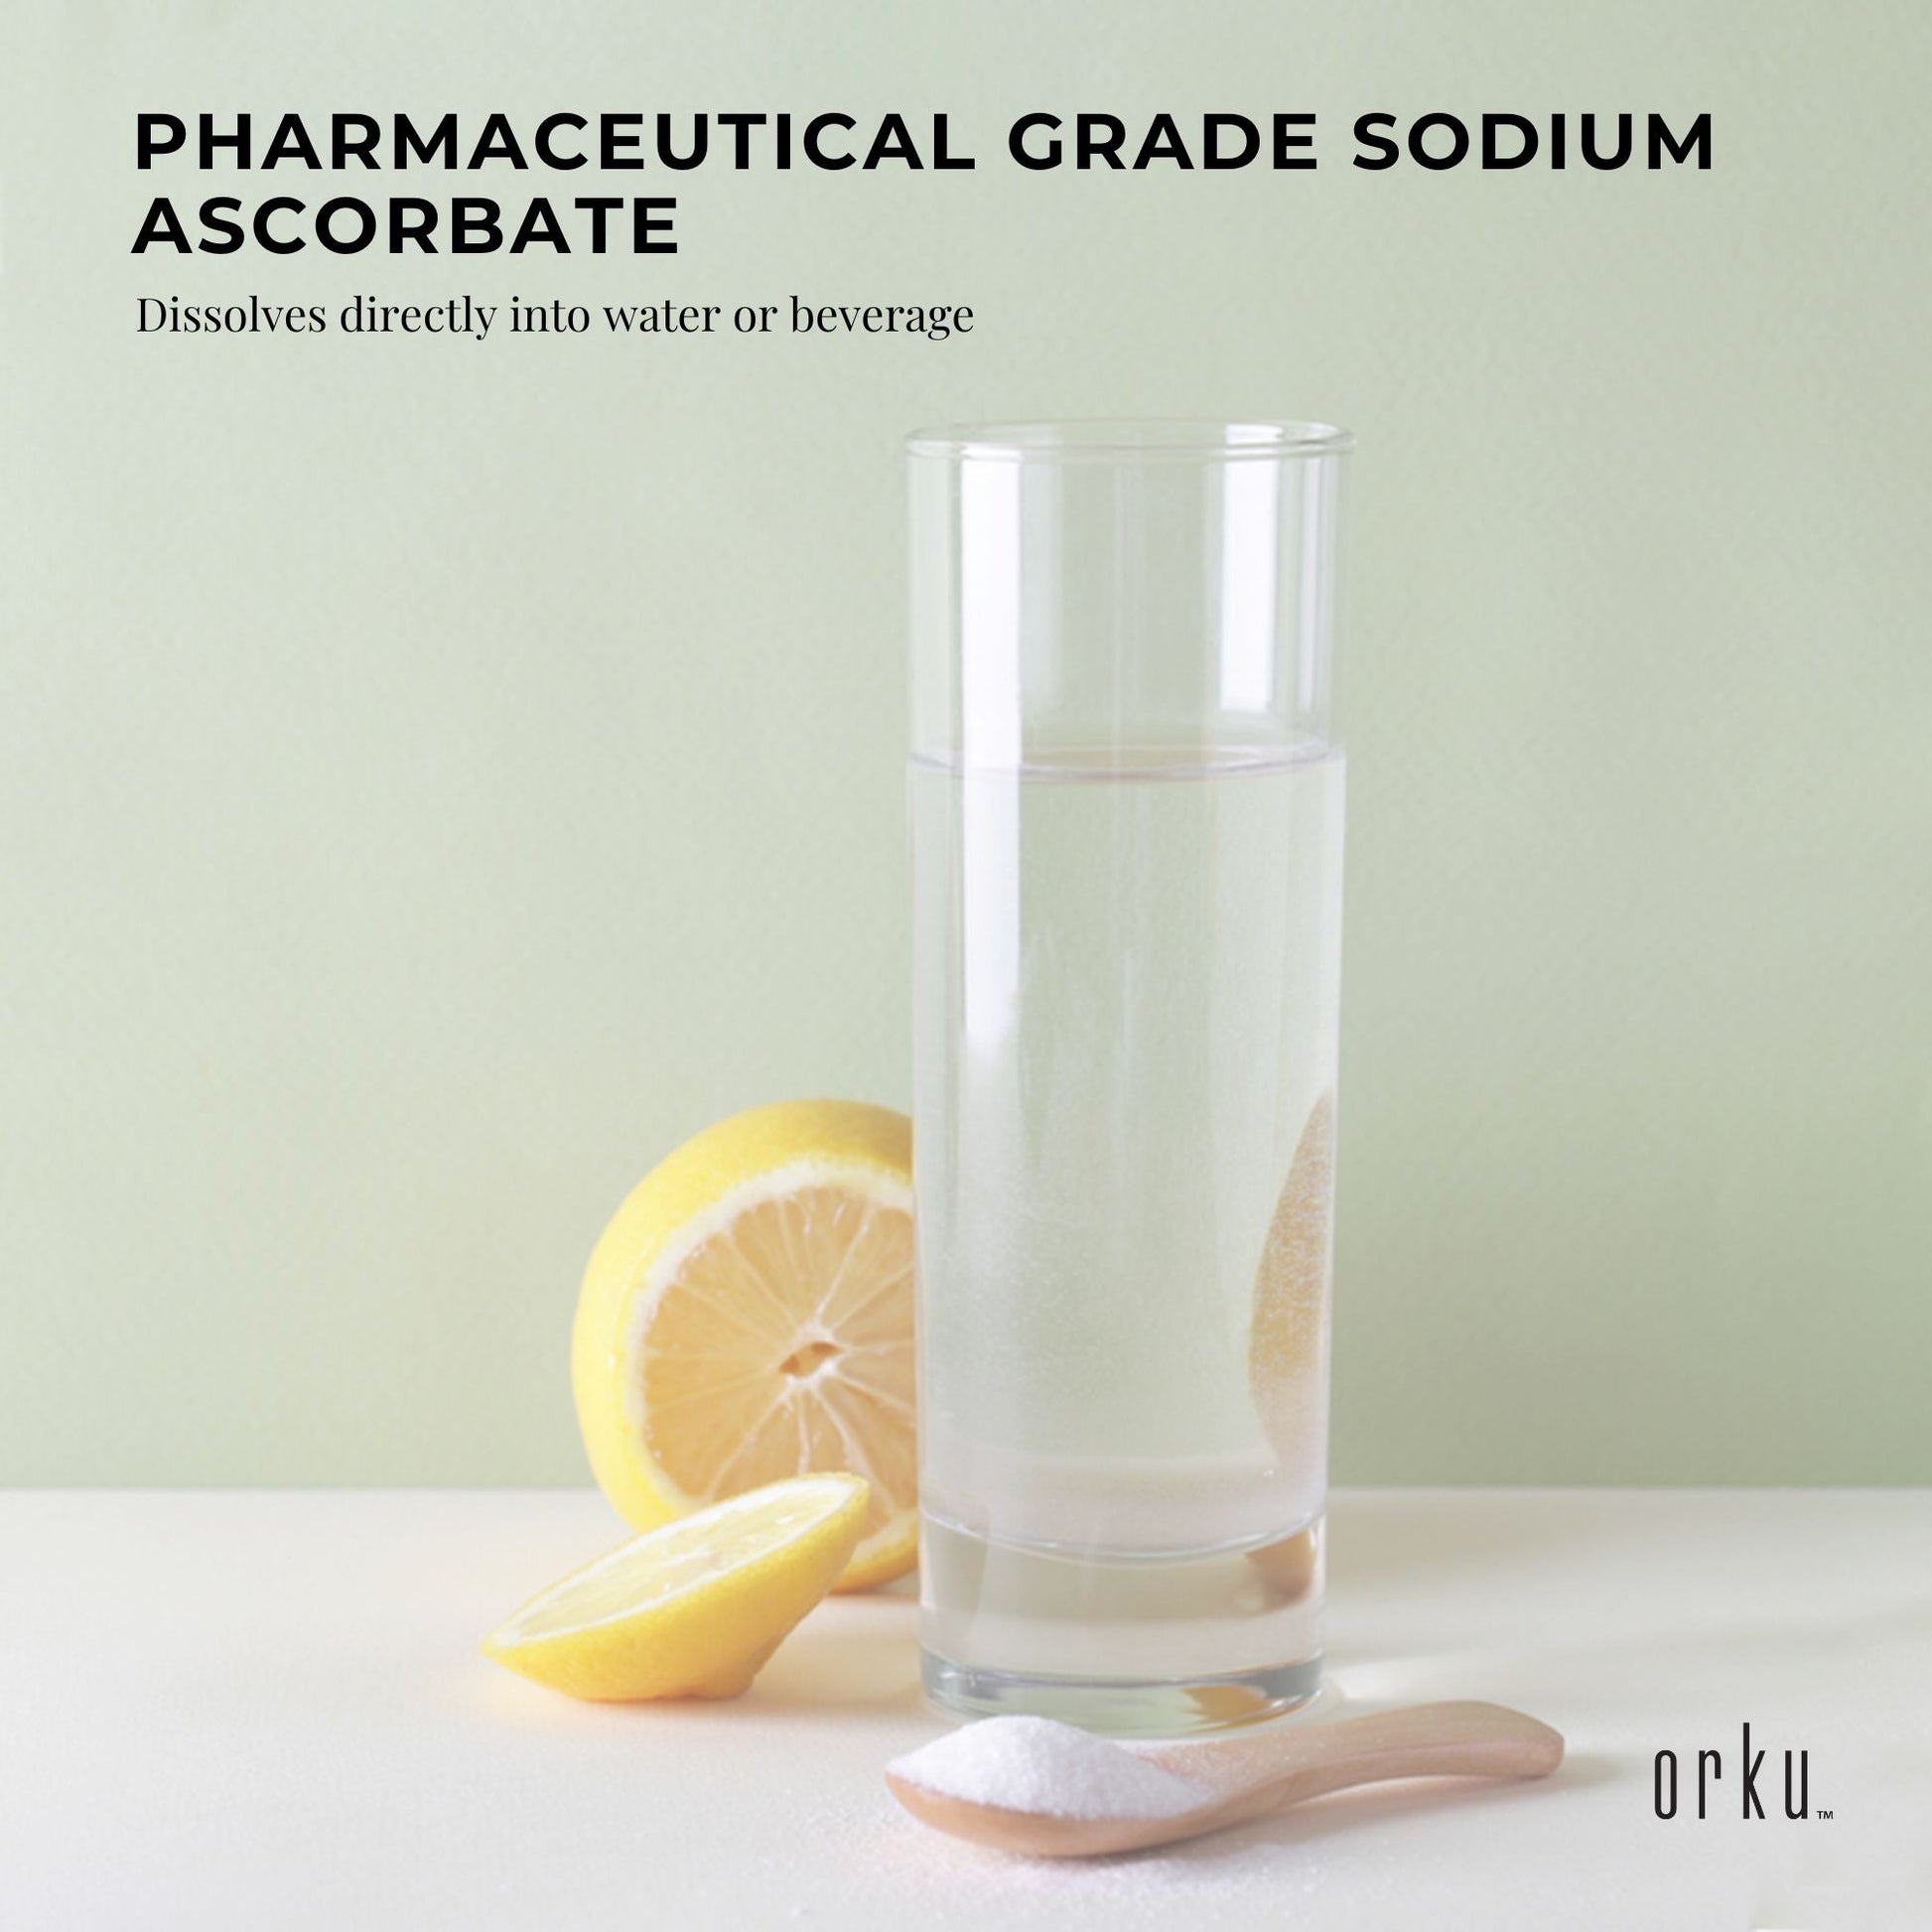 20Kg Sodium Ascorbate Powder - Vitamin C Buffered Pharmaceutical Ascorbic Acid